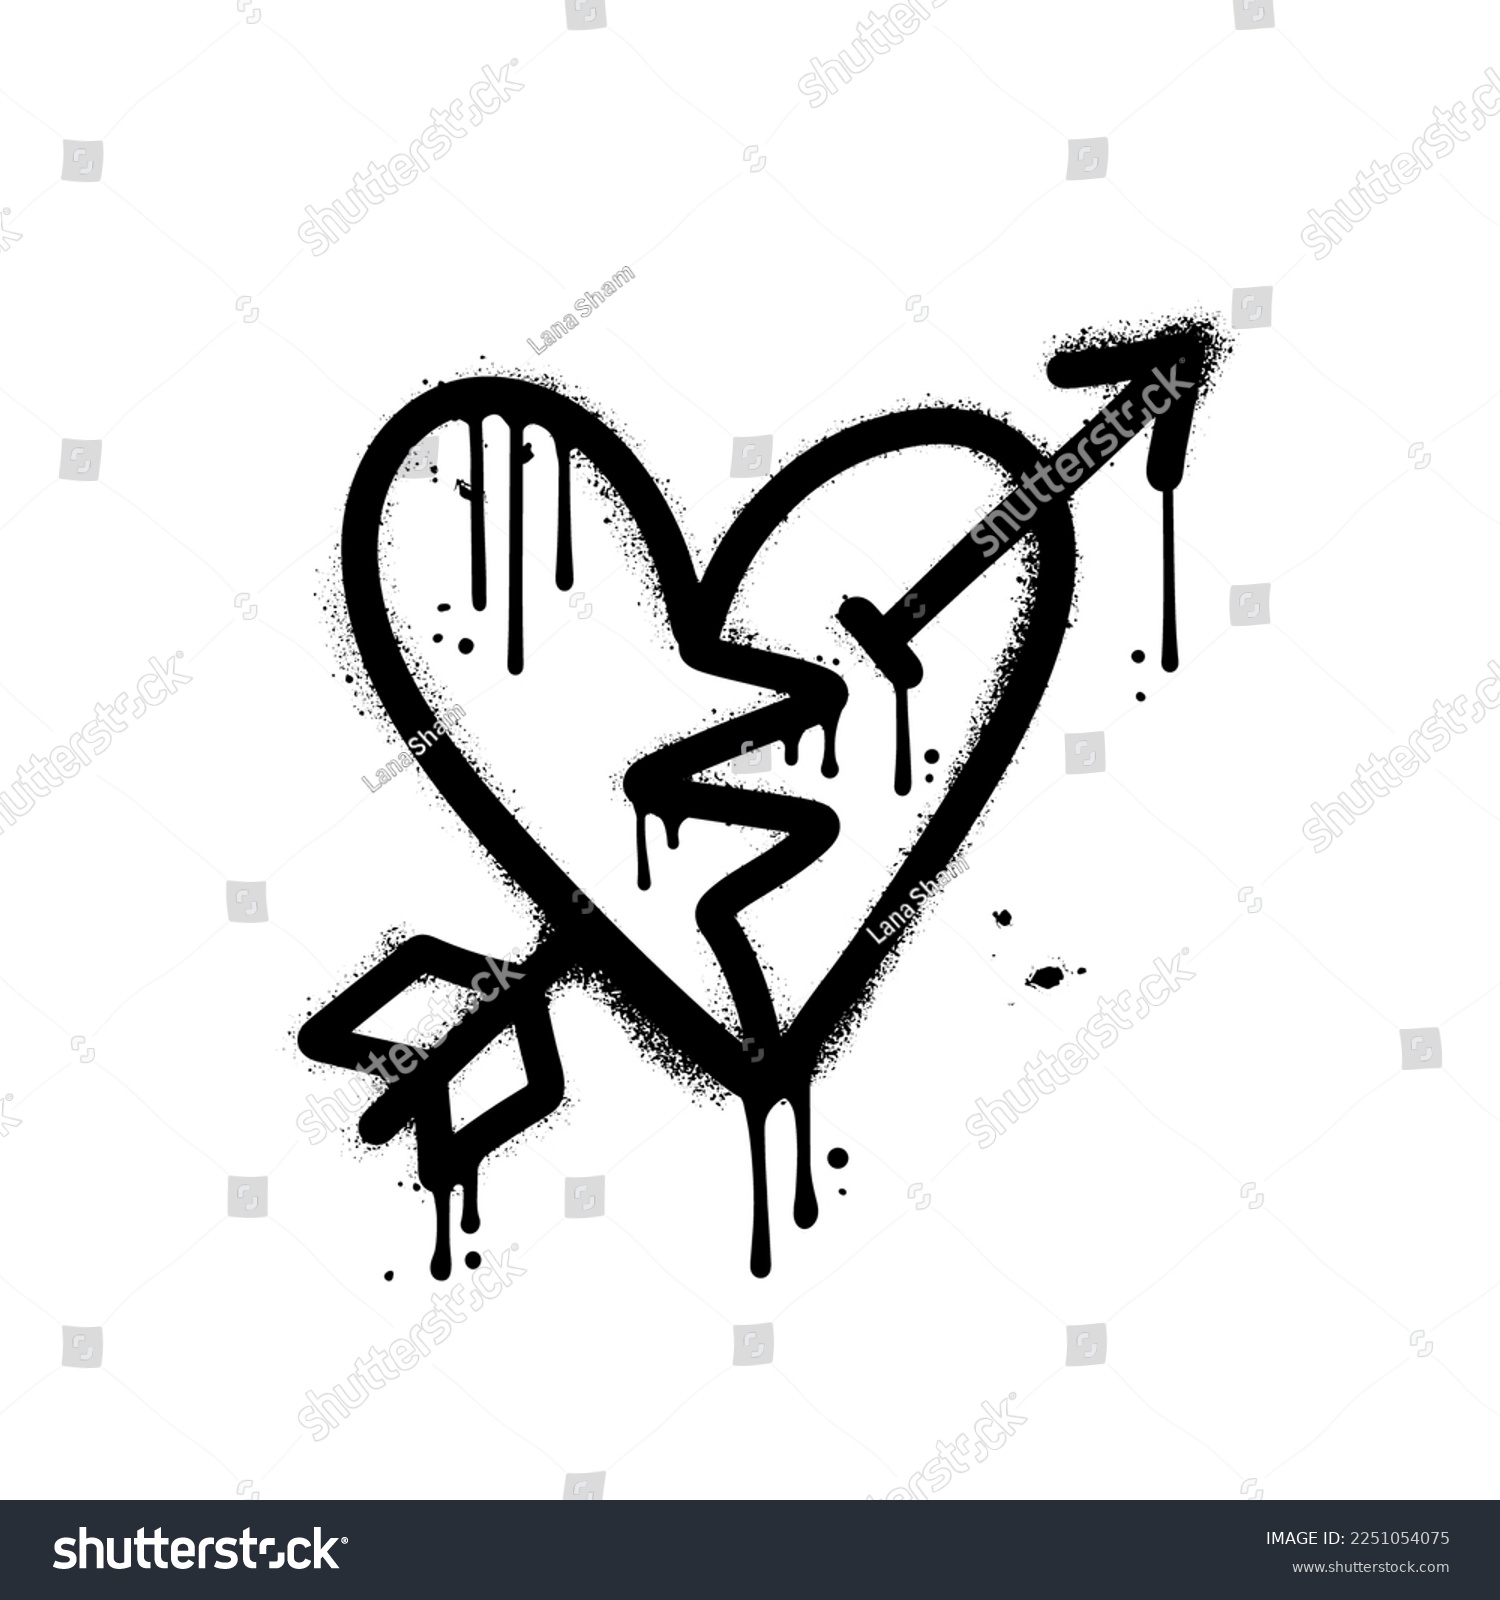 SVG of Broken heart shape with arrow. Black paint urban graffiti vector illustration. Textured isolated print concept. svg